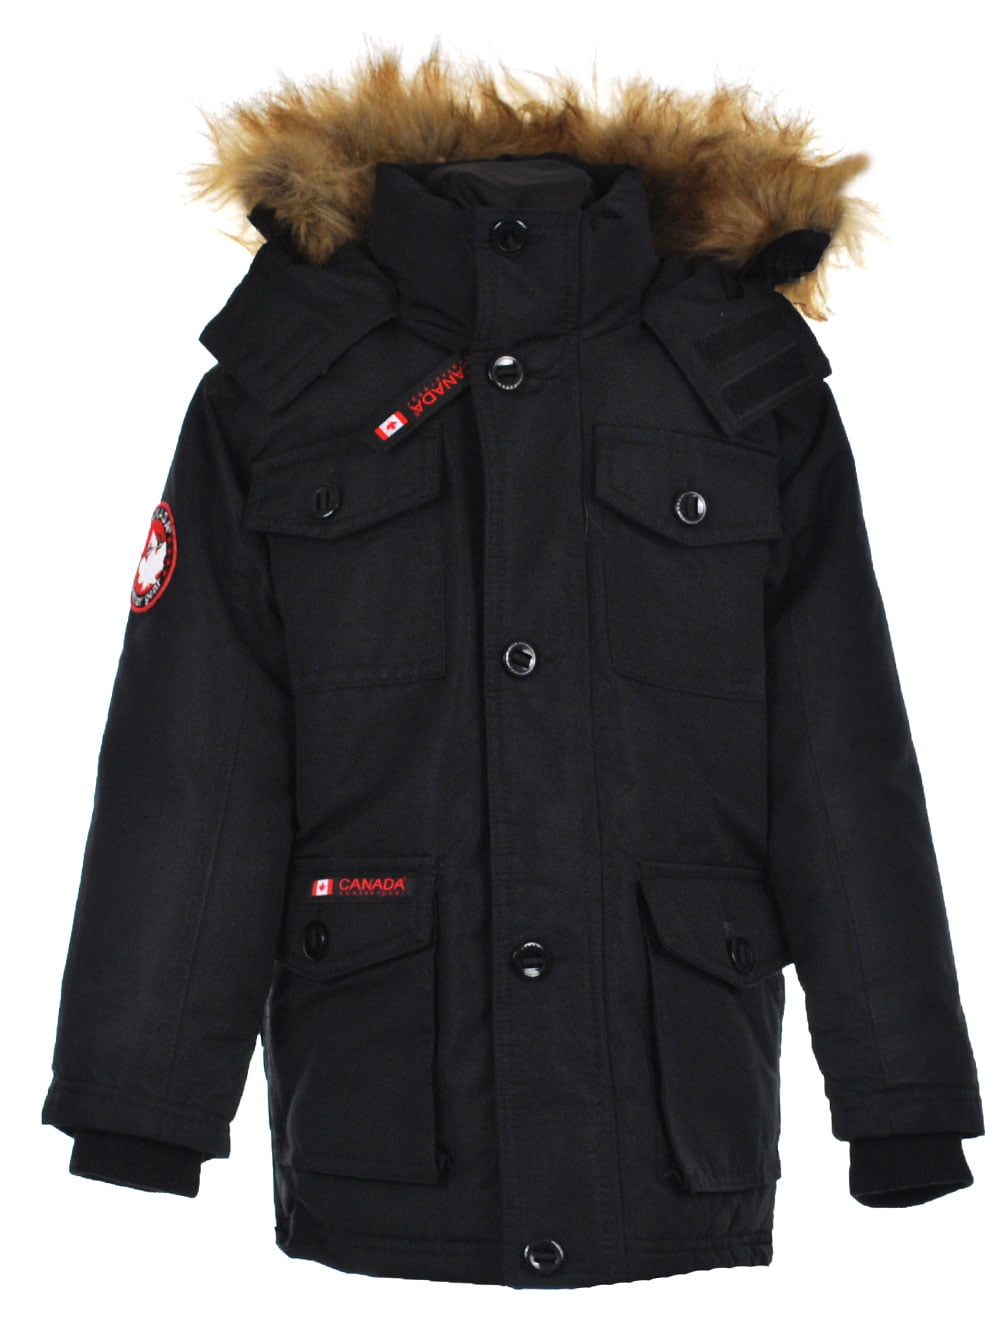 Canada Weather Gear - Canada Weather Gear Boys' Insulated Jacket